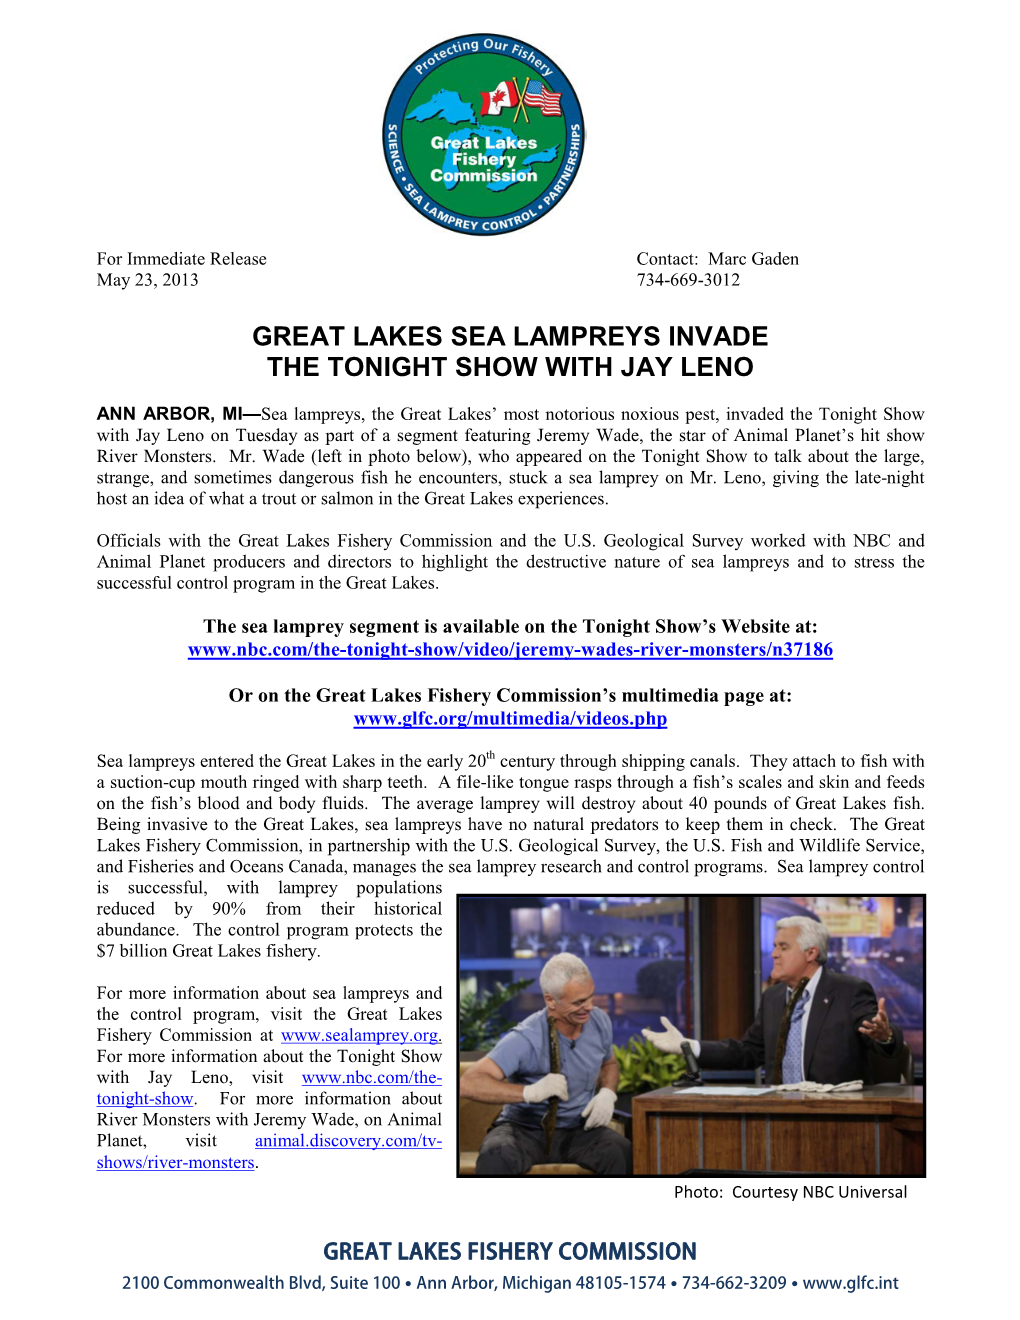 Great Lakes Sea Lampreys Invade the Tonight Show with Jay Leno